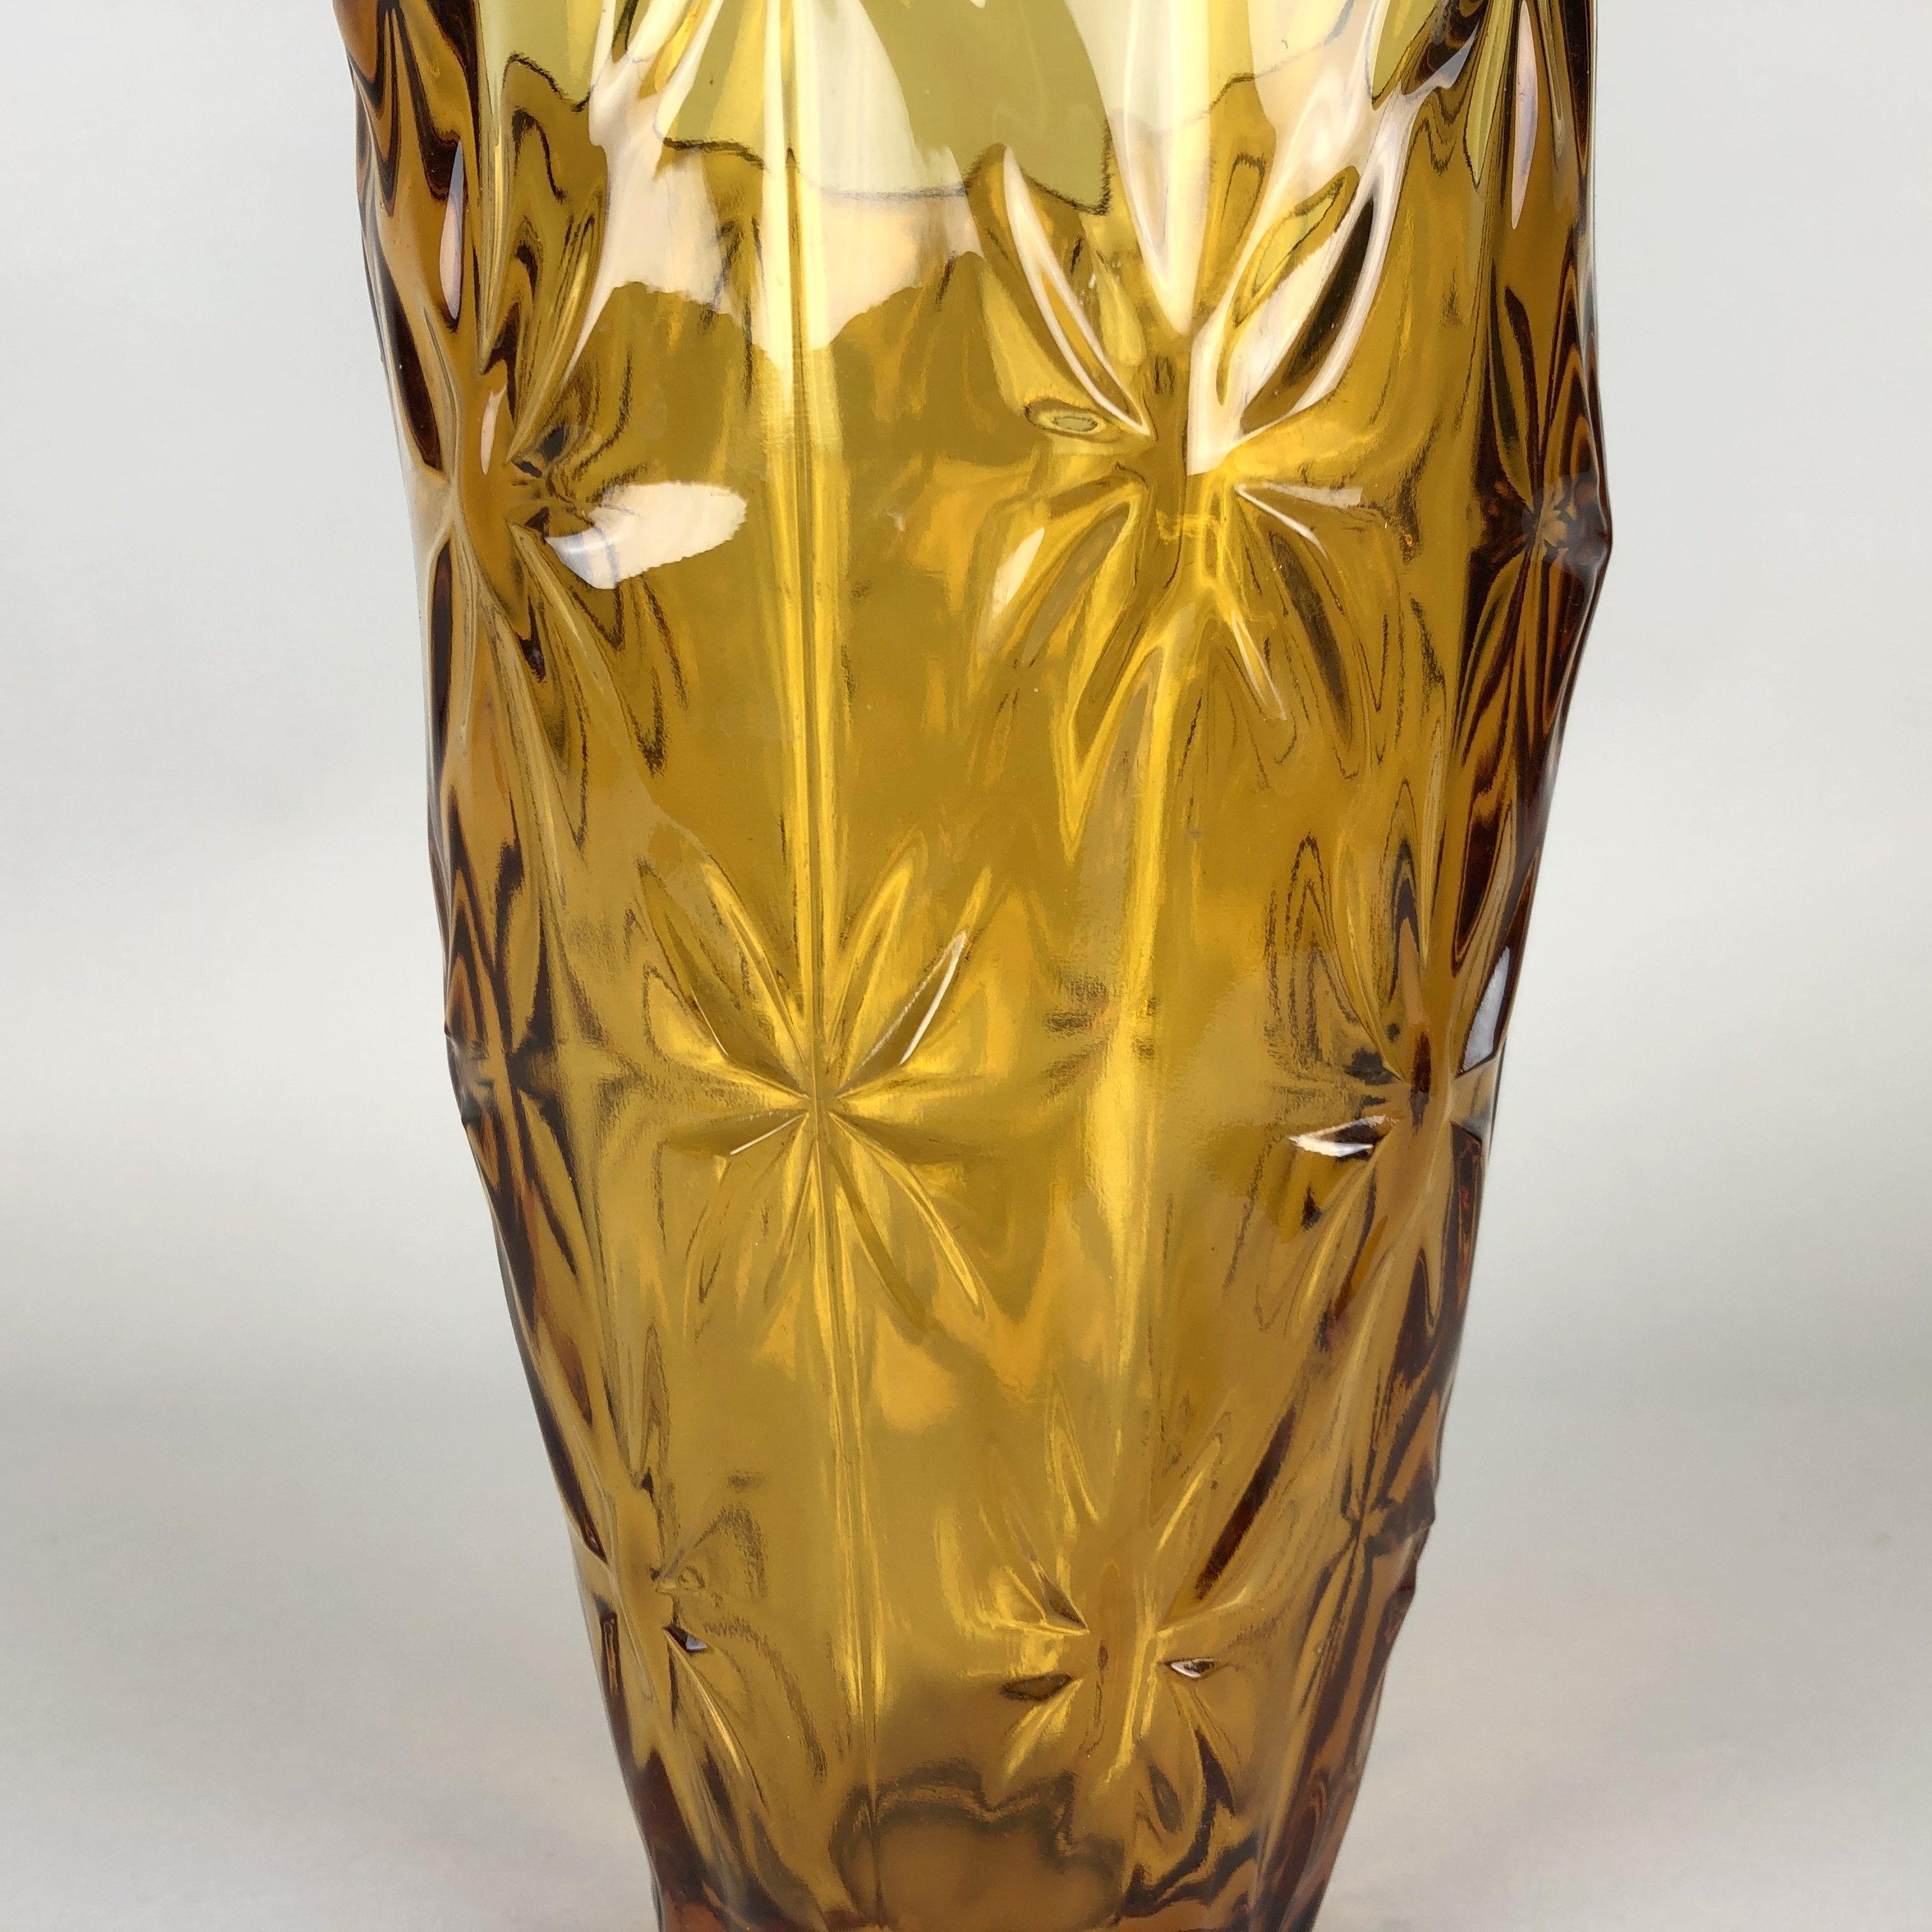 Lovely vintage amber glass, heavy vase.